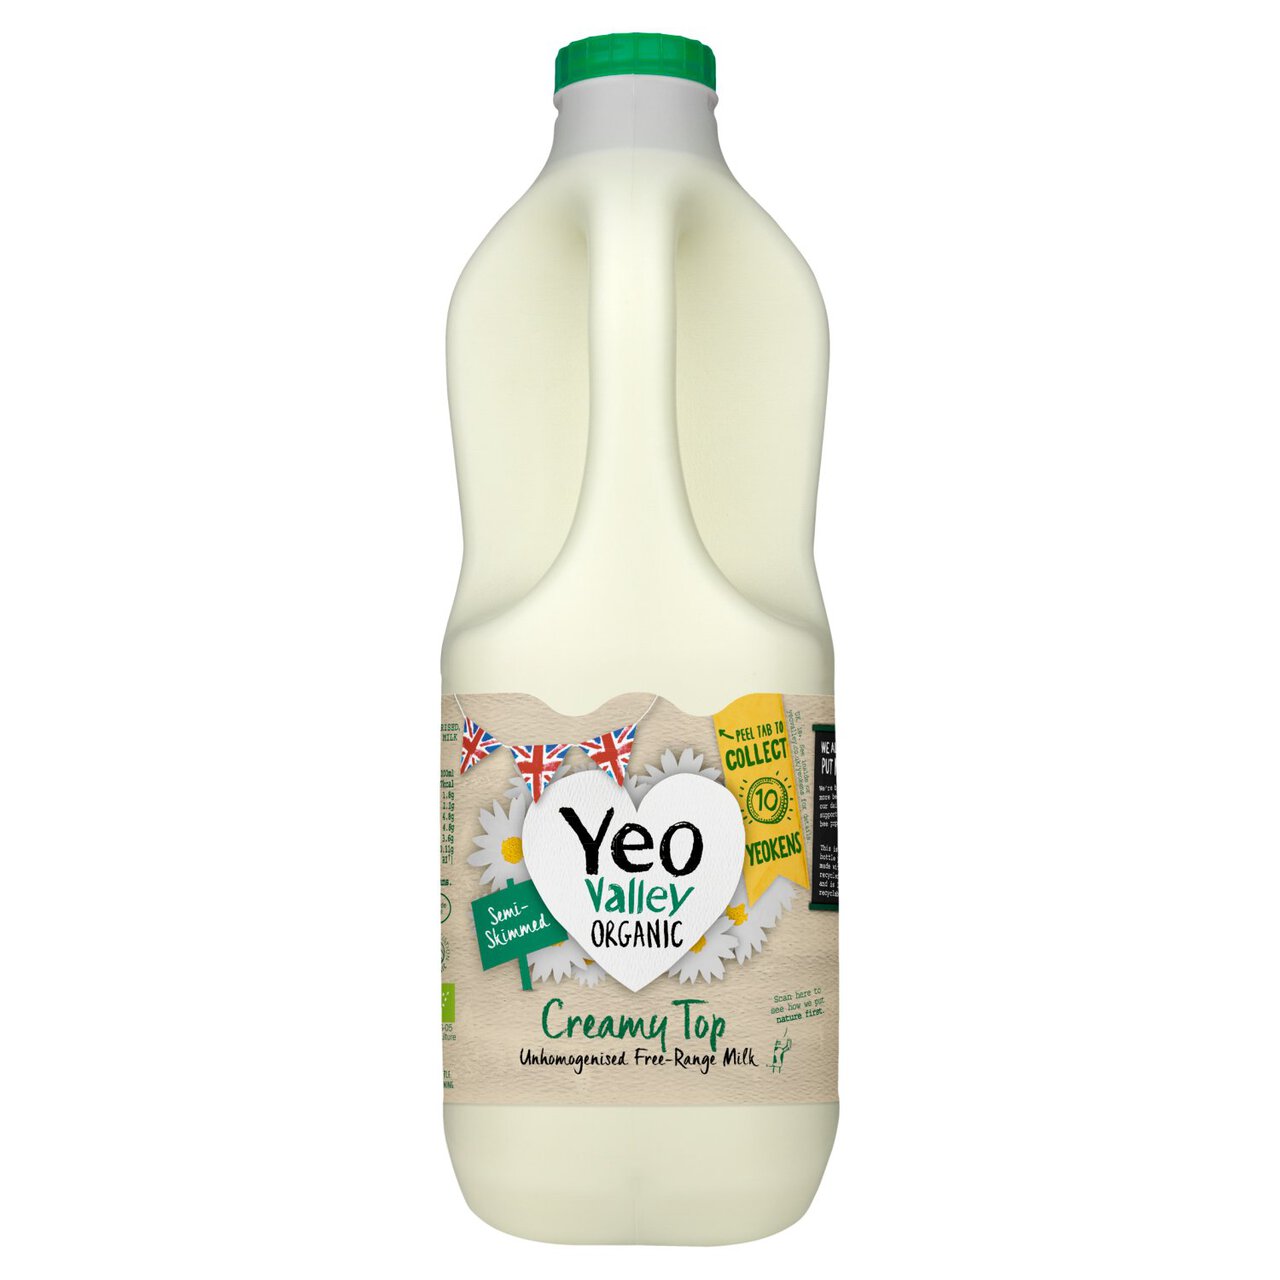 Yeo Valley Organic Creamy Top Unhomogenised Free-Range Semi Skimmed Milk 2l